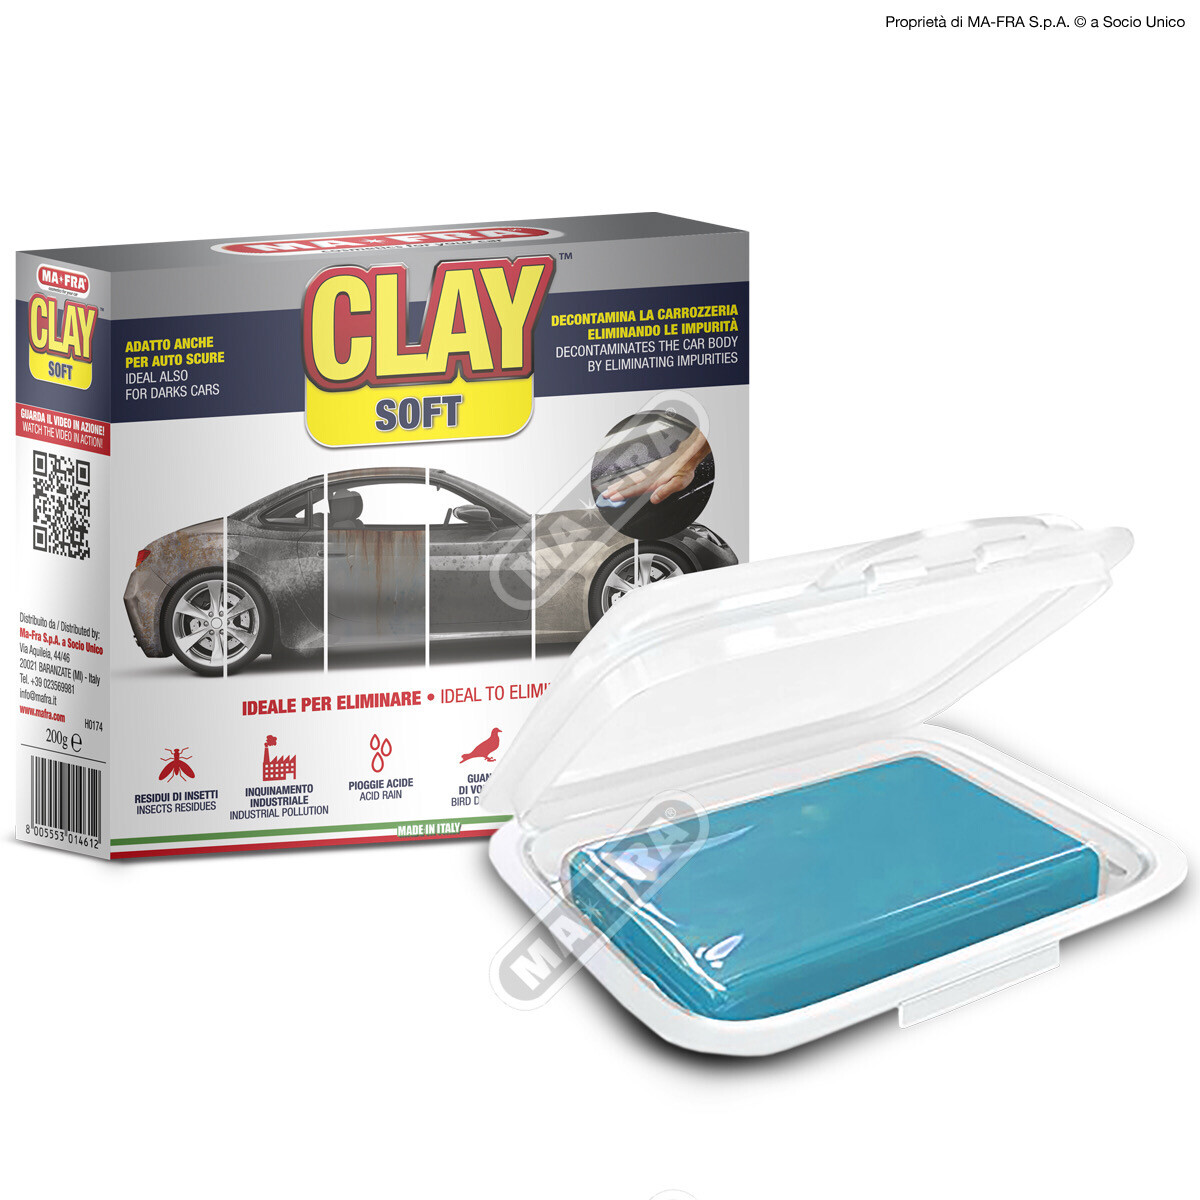 Clay soft